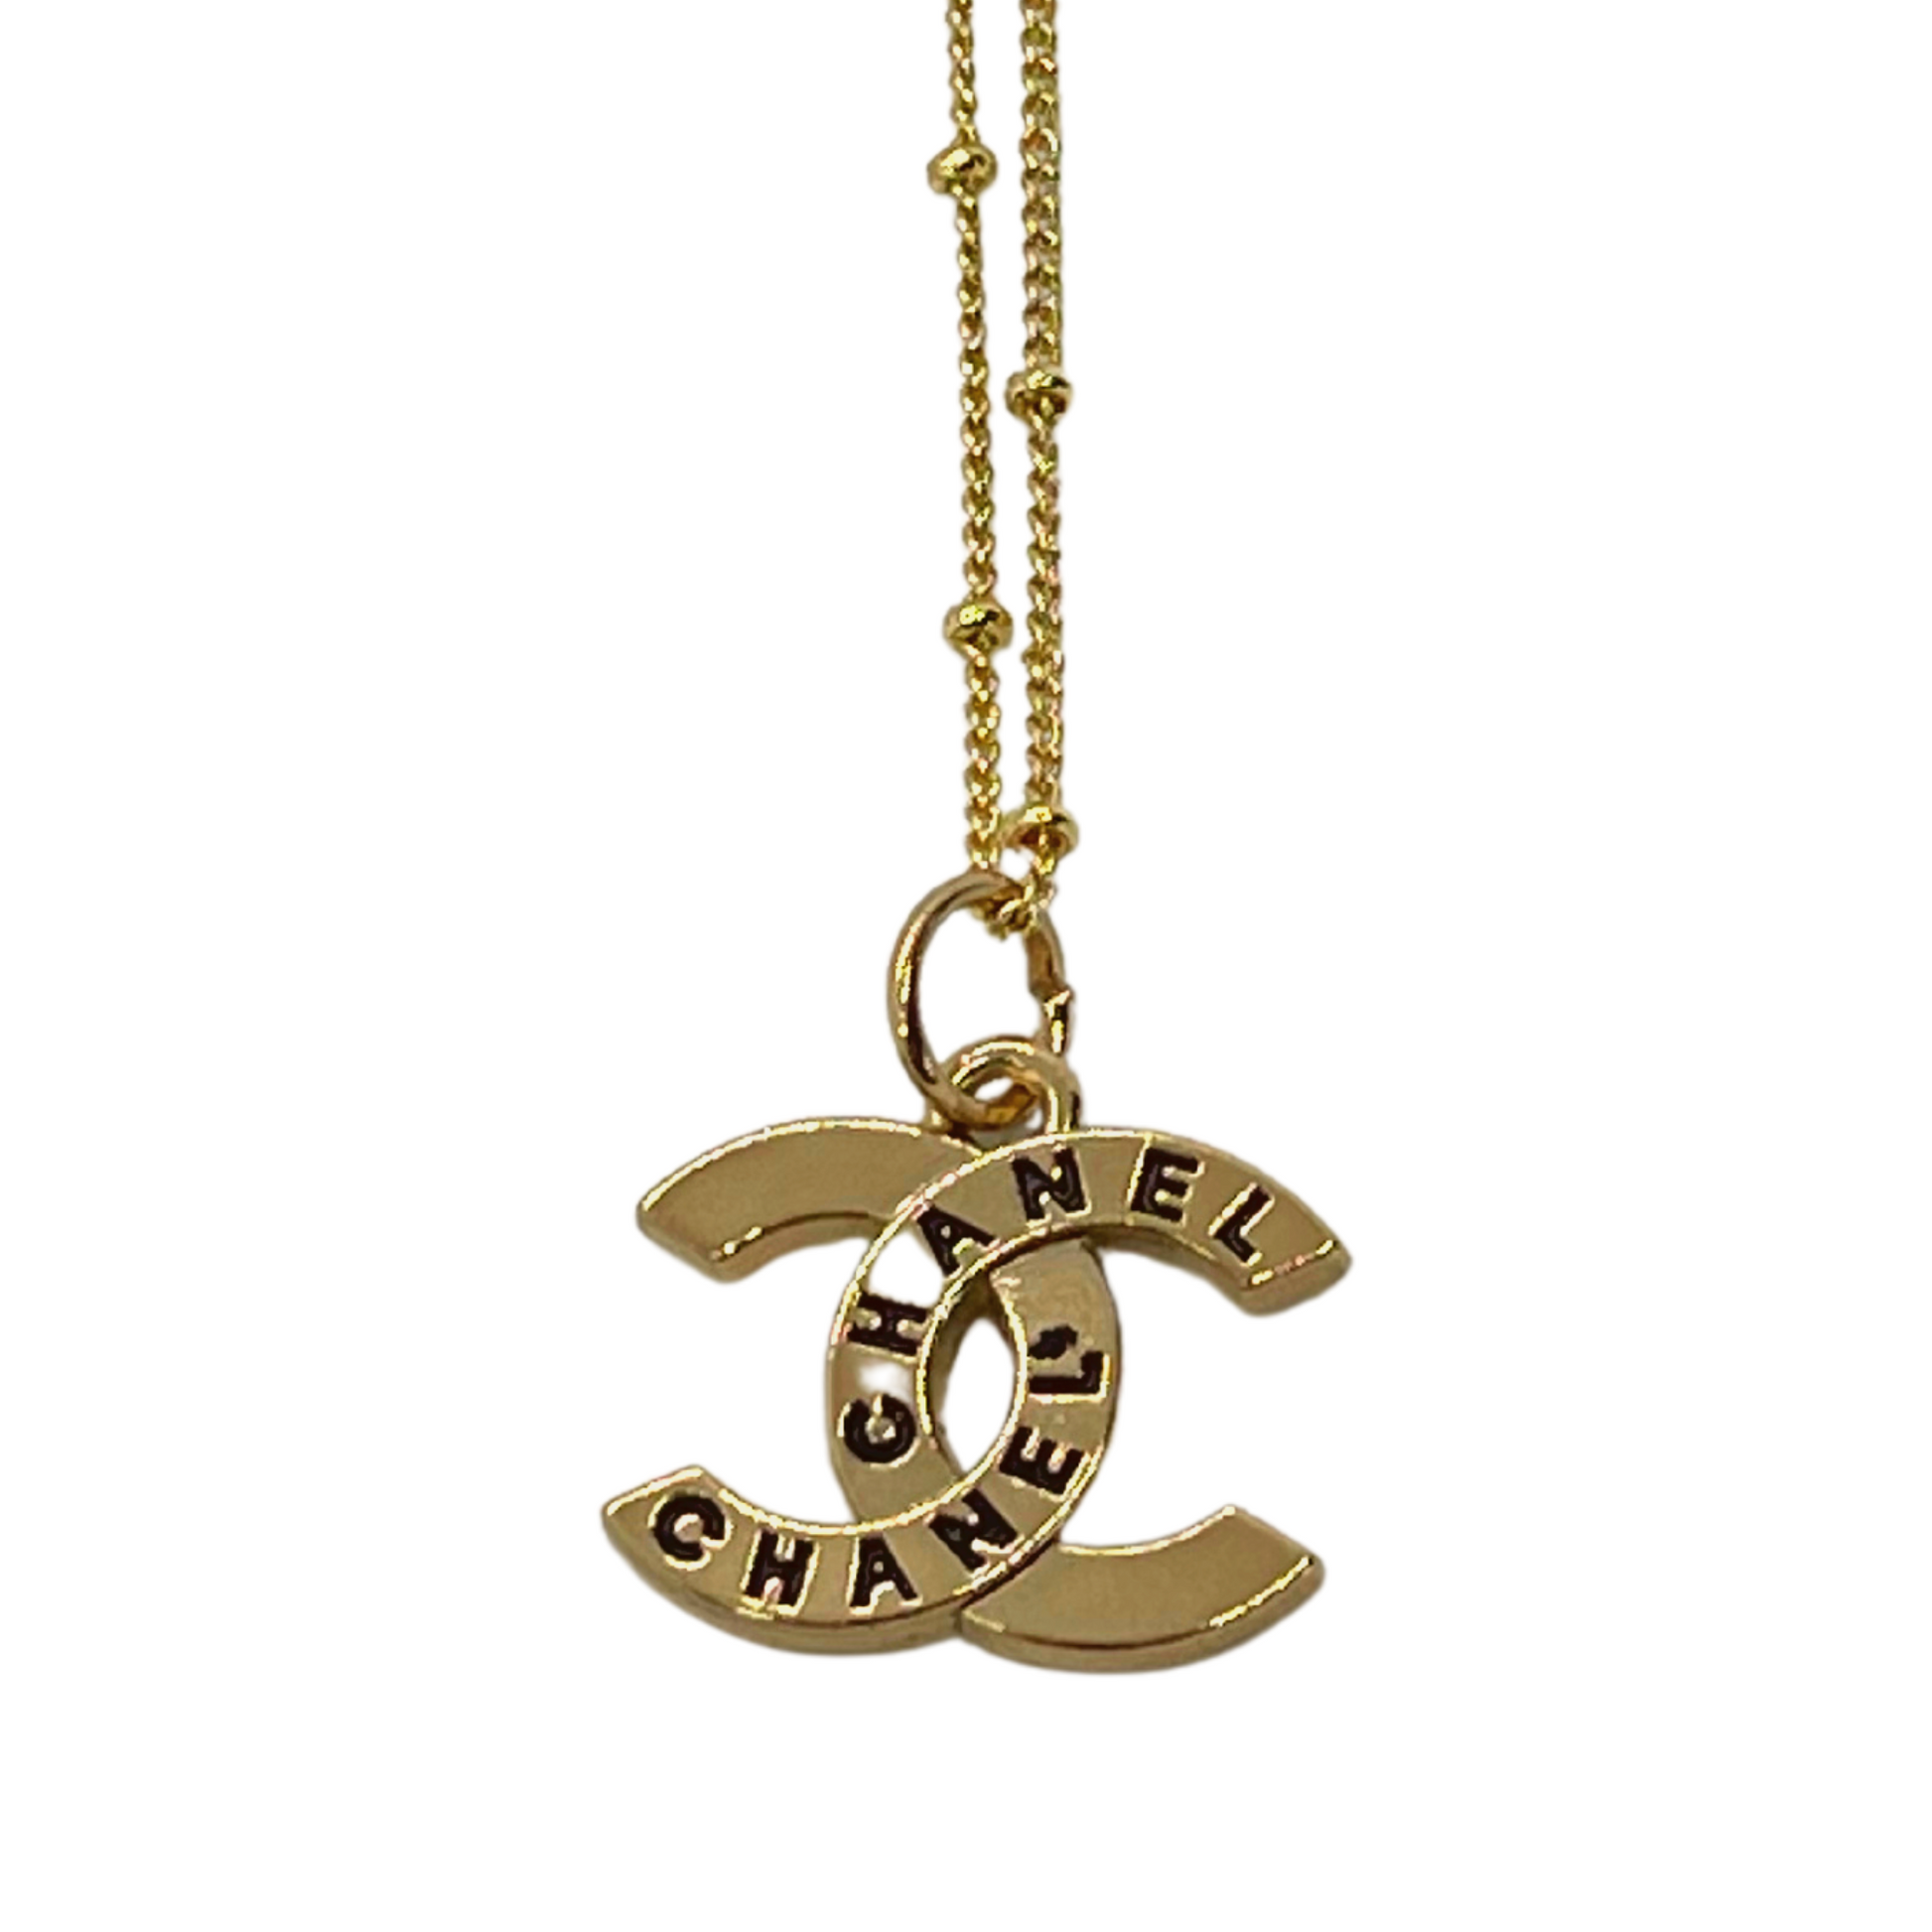 Chanel Pendant Necklace CC Logo Pearl Stone Rhinestone Light Gold 09A 032